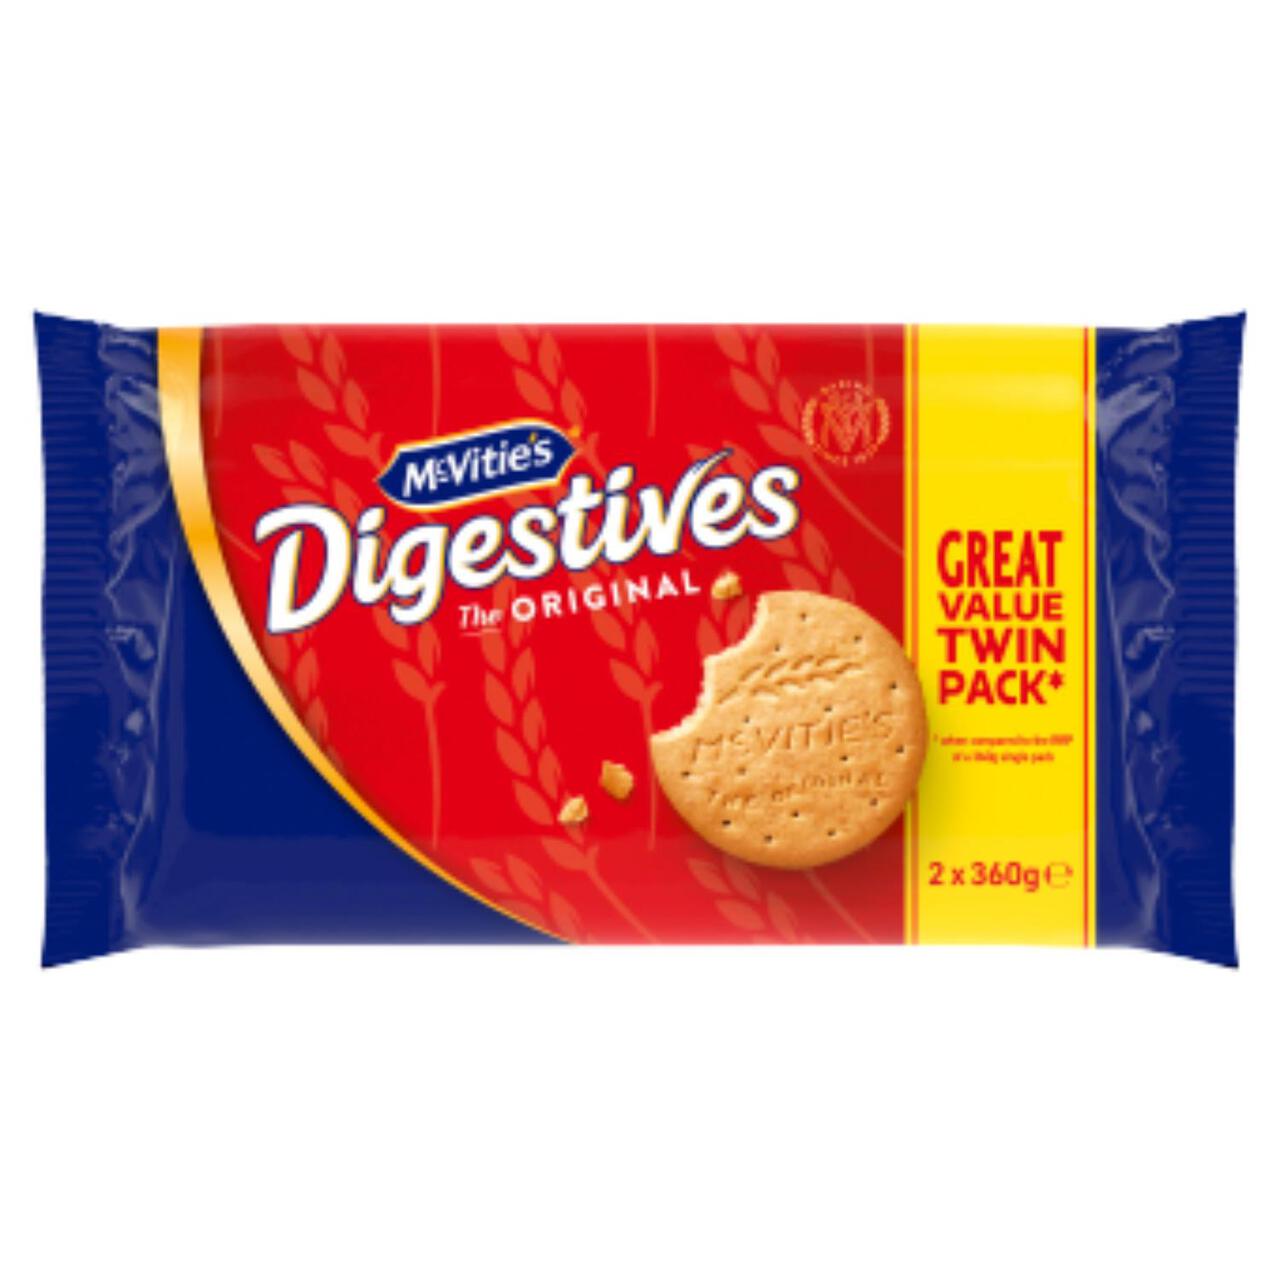 McVitie's Digestive Biscuits 2 x 360g